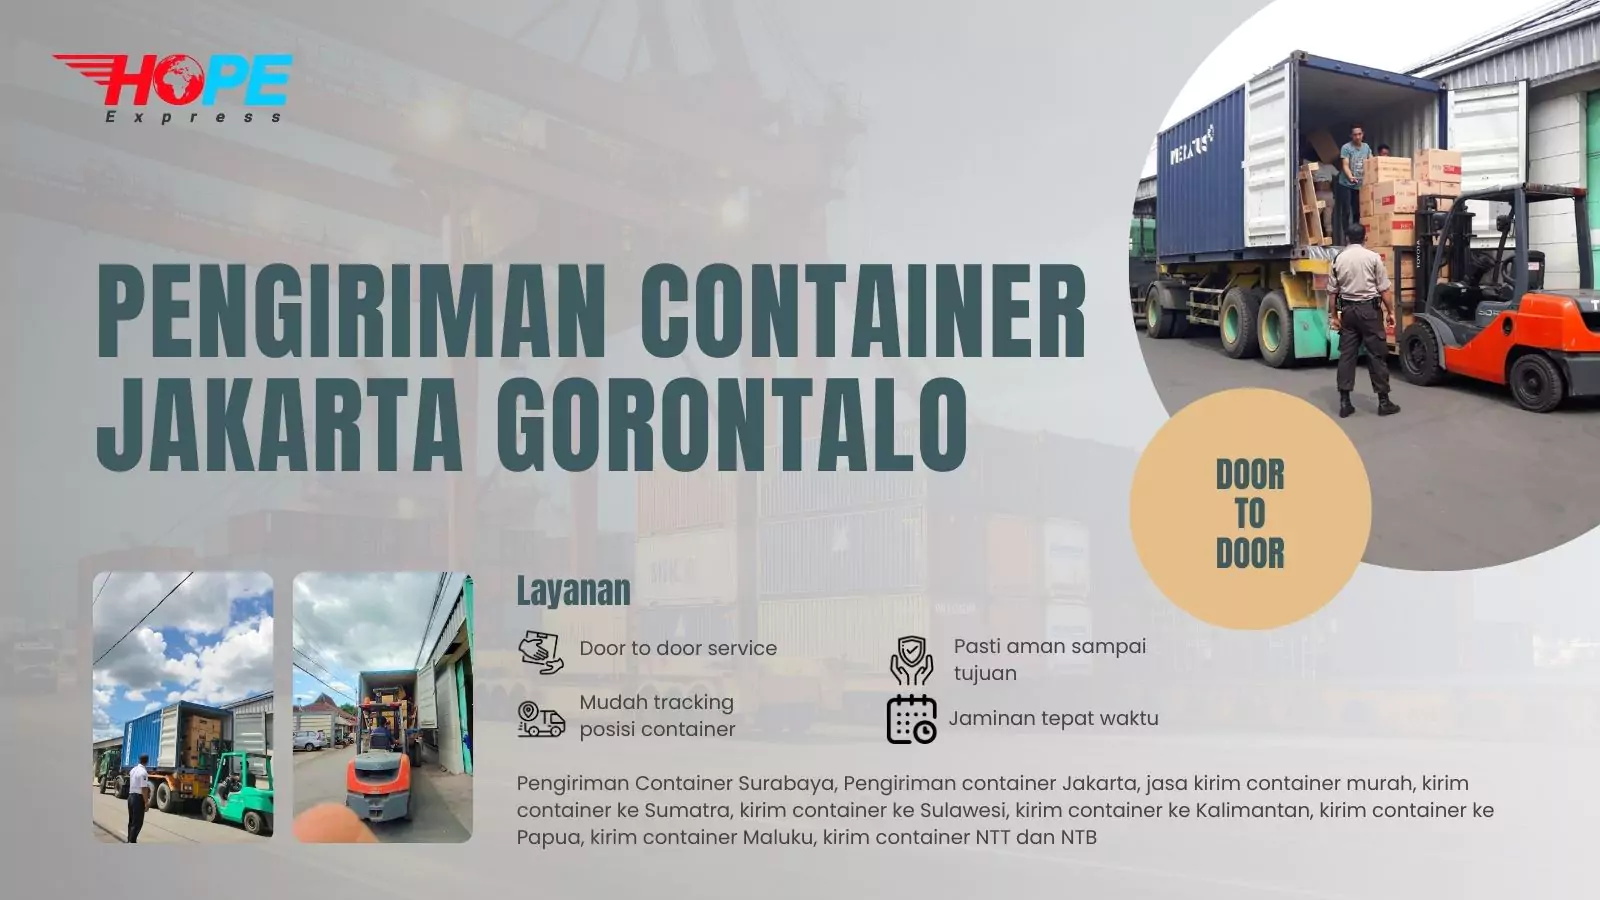 Pengiriman Container Jakarta Gorontalo